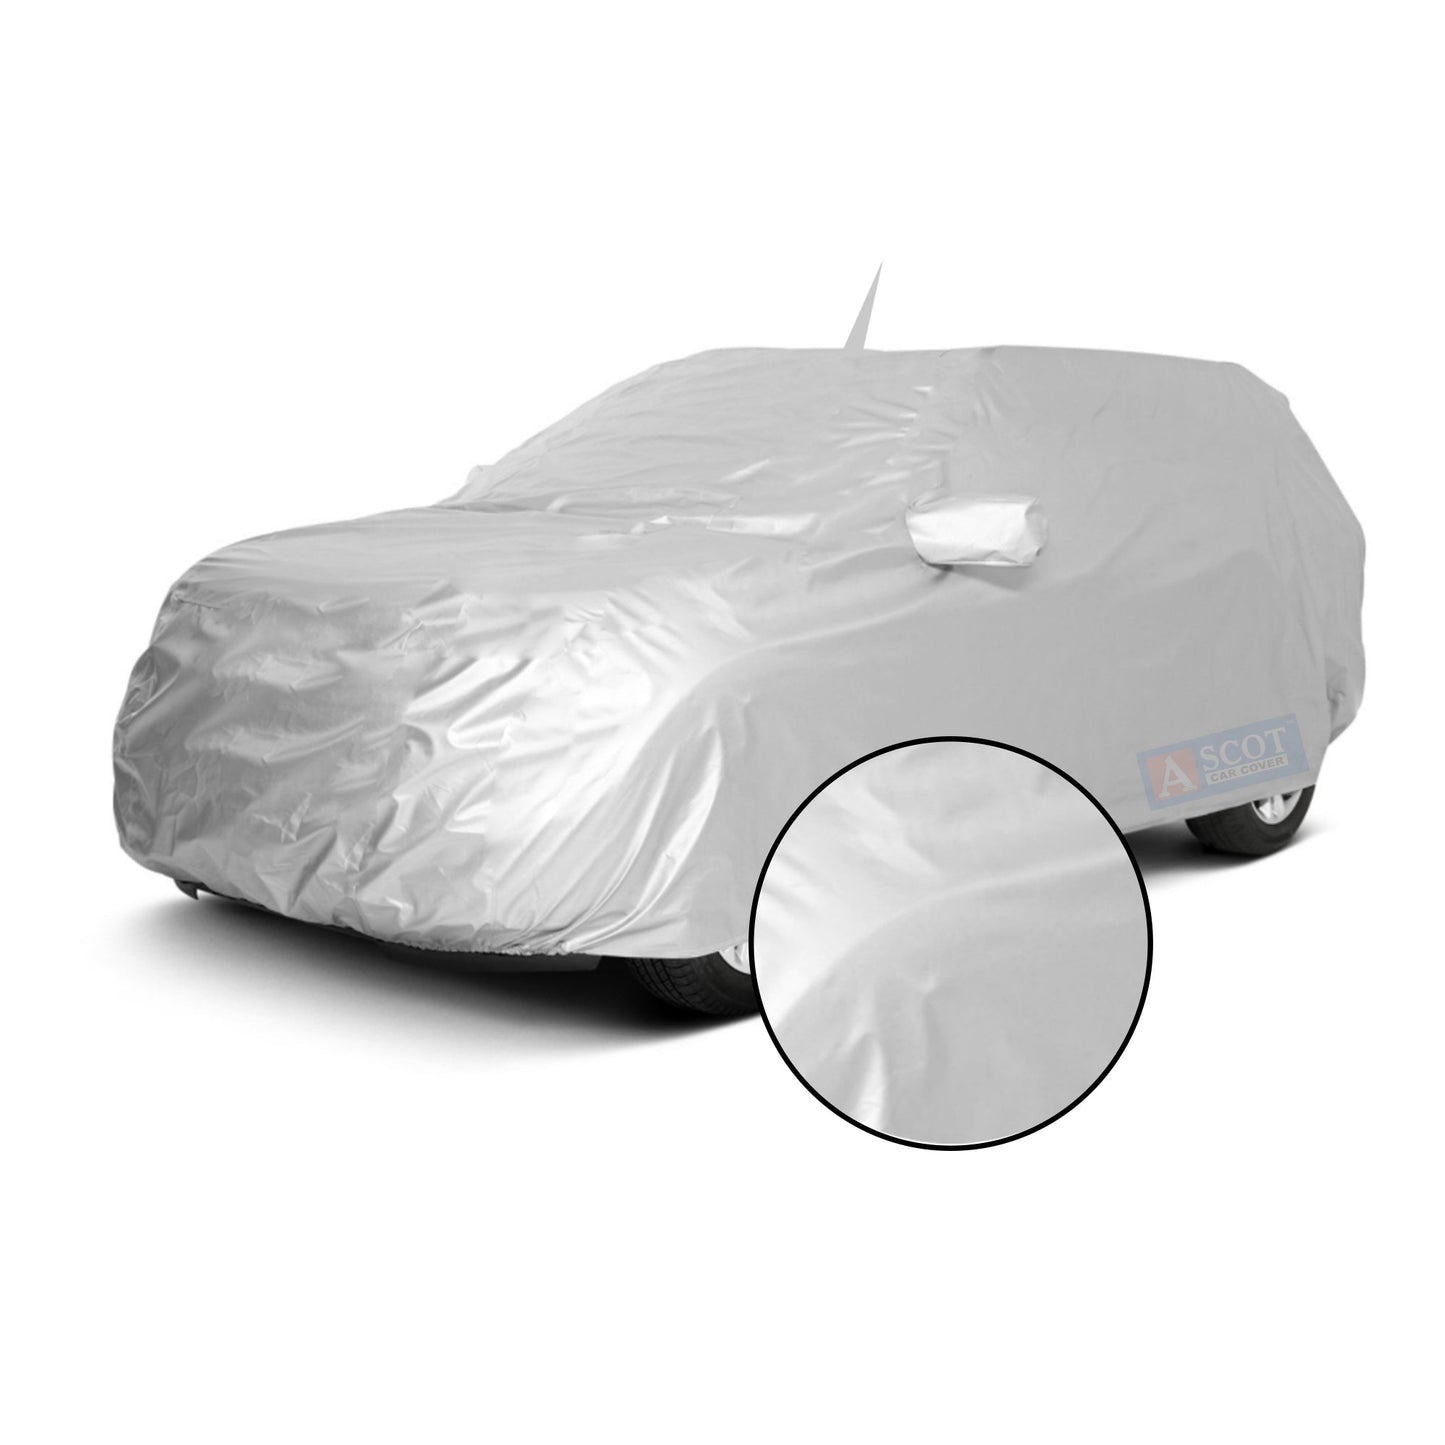 Ascot Mercedes-Benz C-Class Limousine 2015-2021 Model Car Body Cover Dust Proof, Trippel Stitched